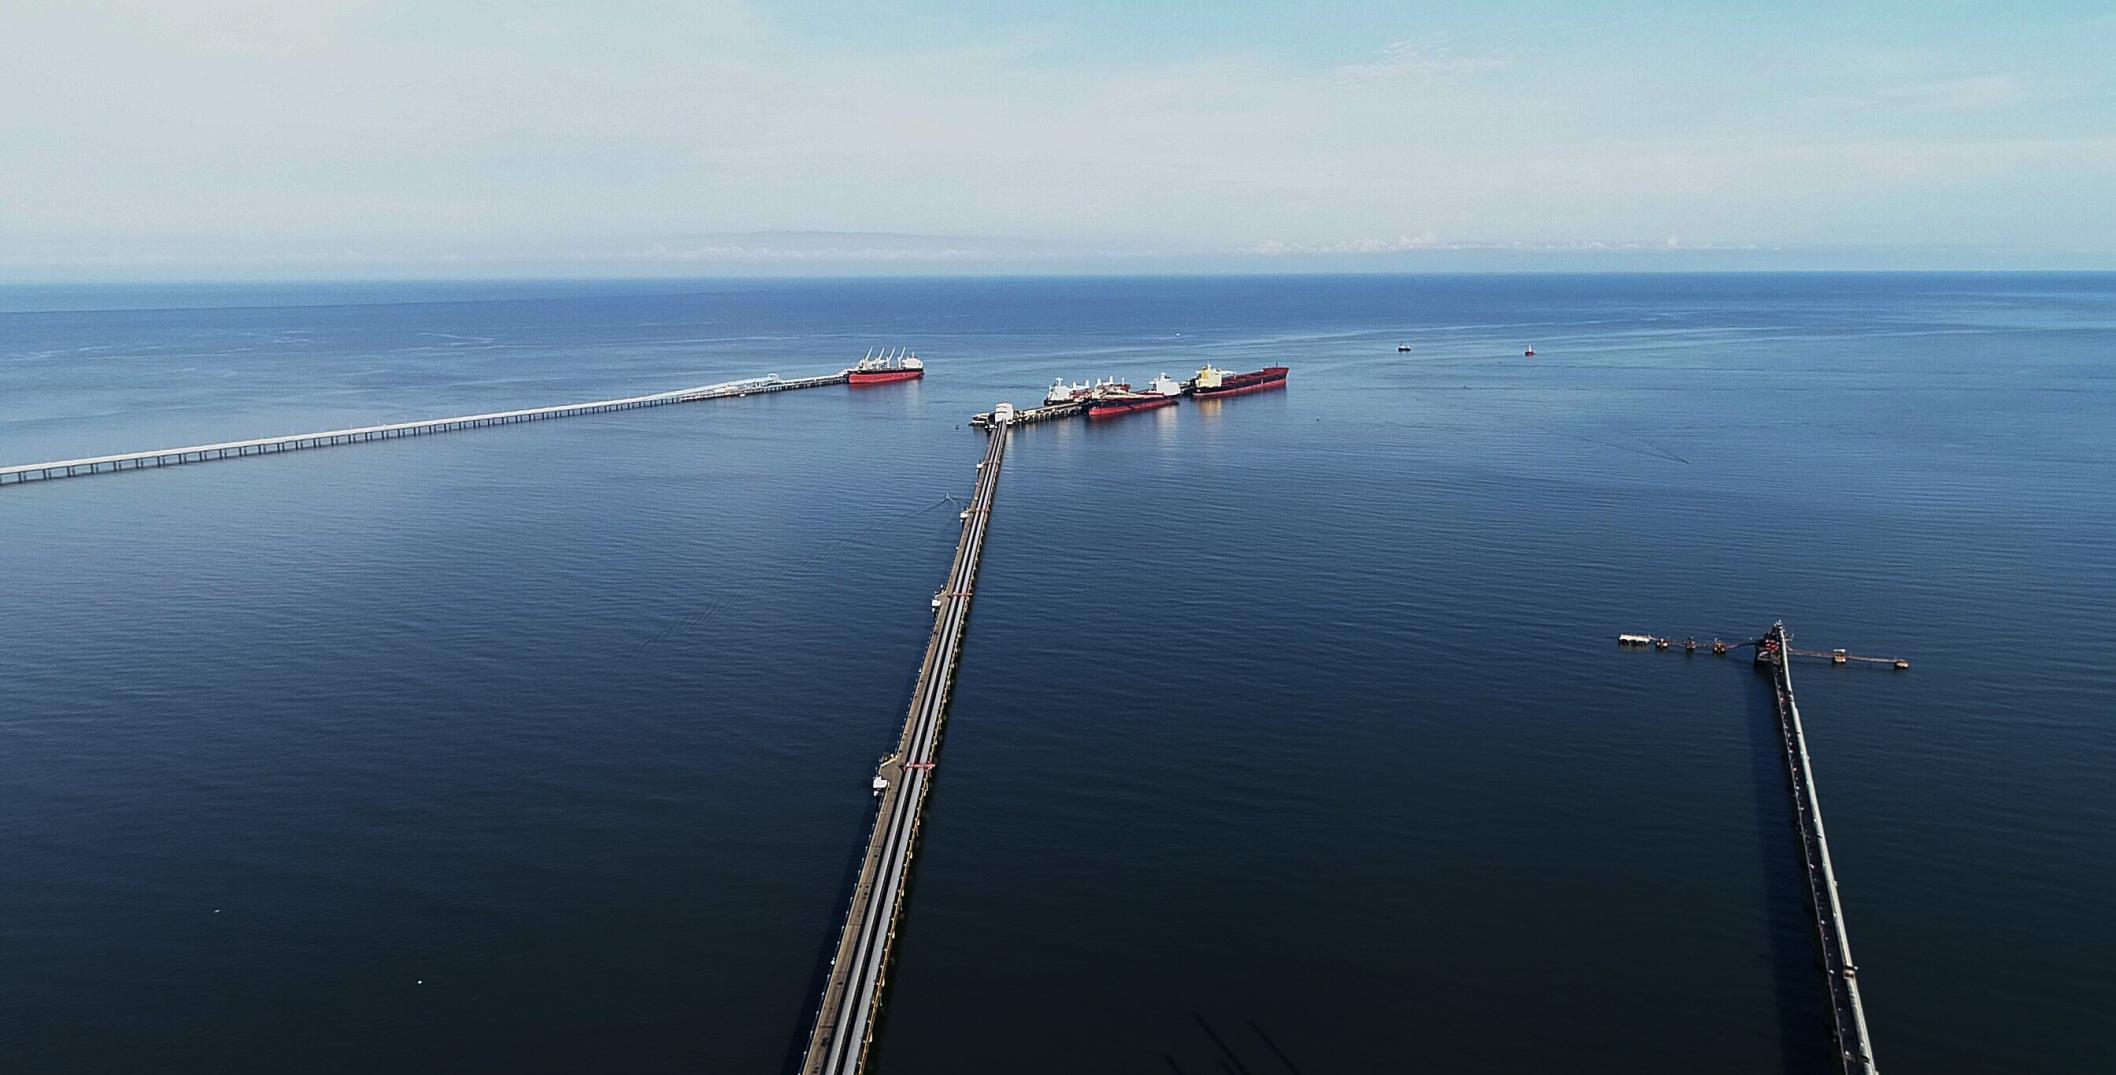 Cargo port with sea view, Drummond Ltd's operation in Santa Marta, Colombia